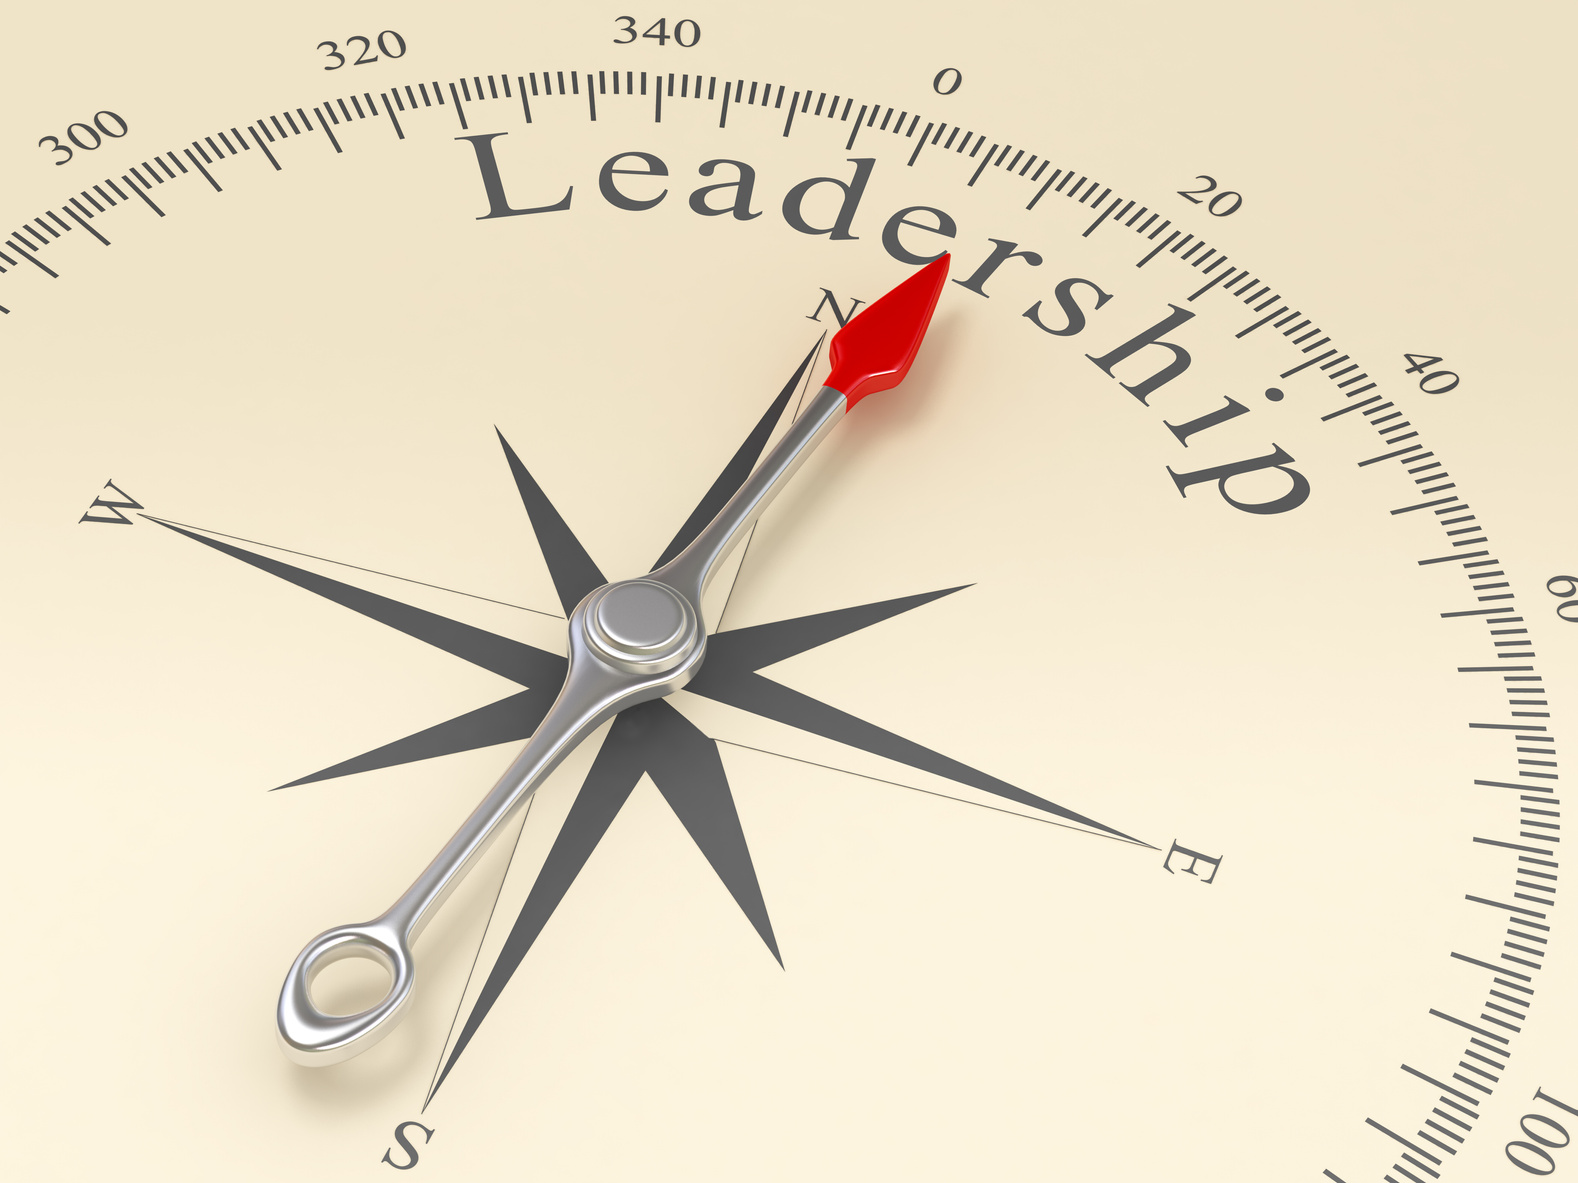 Leadership Concepts